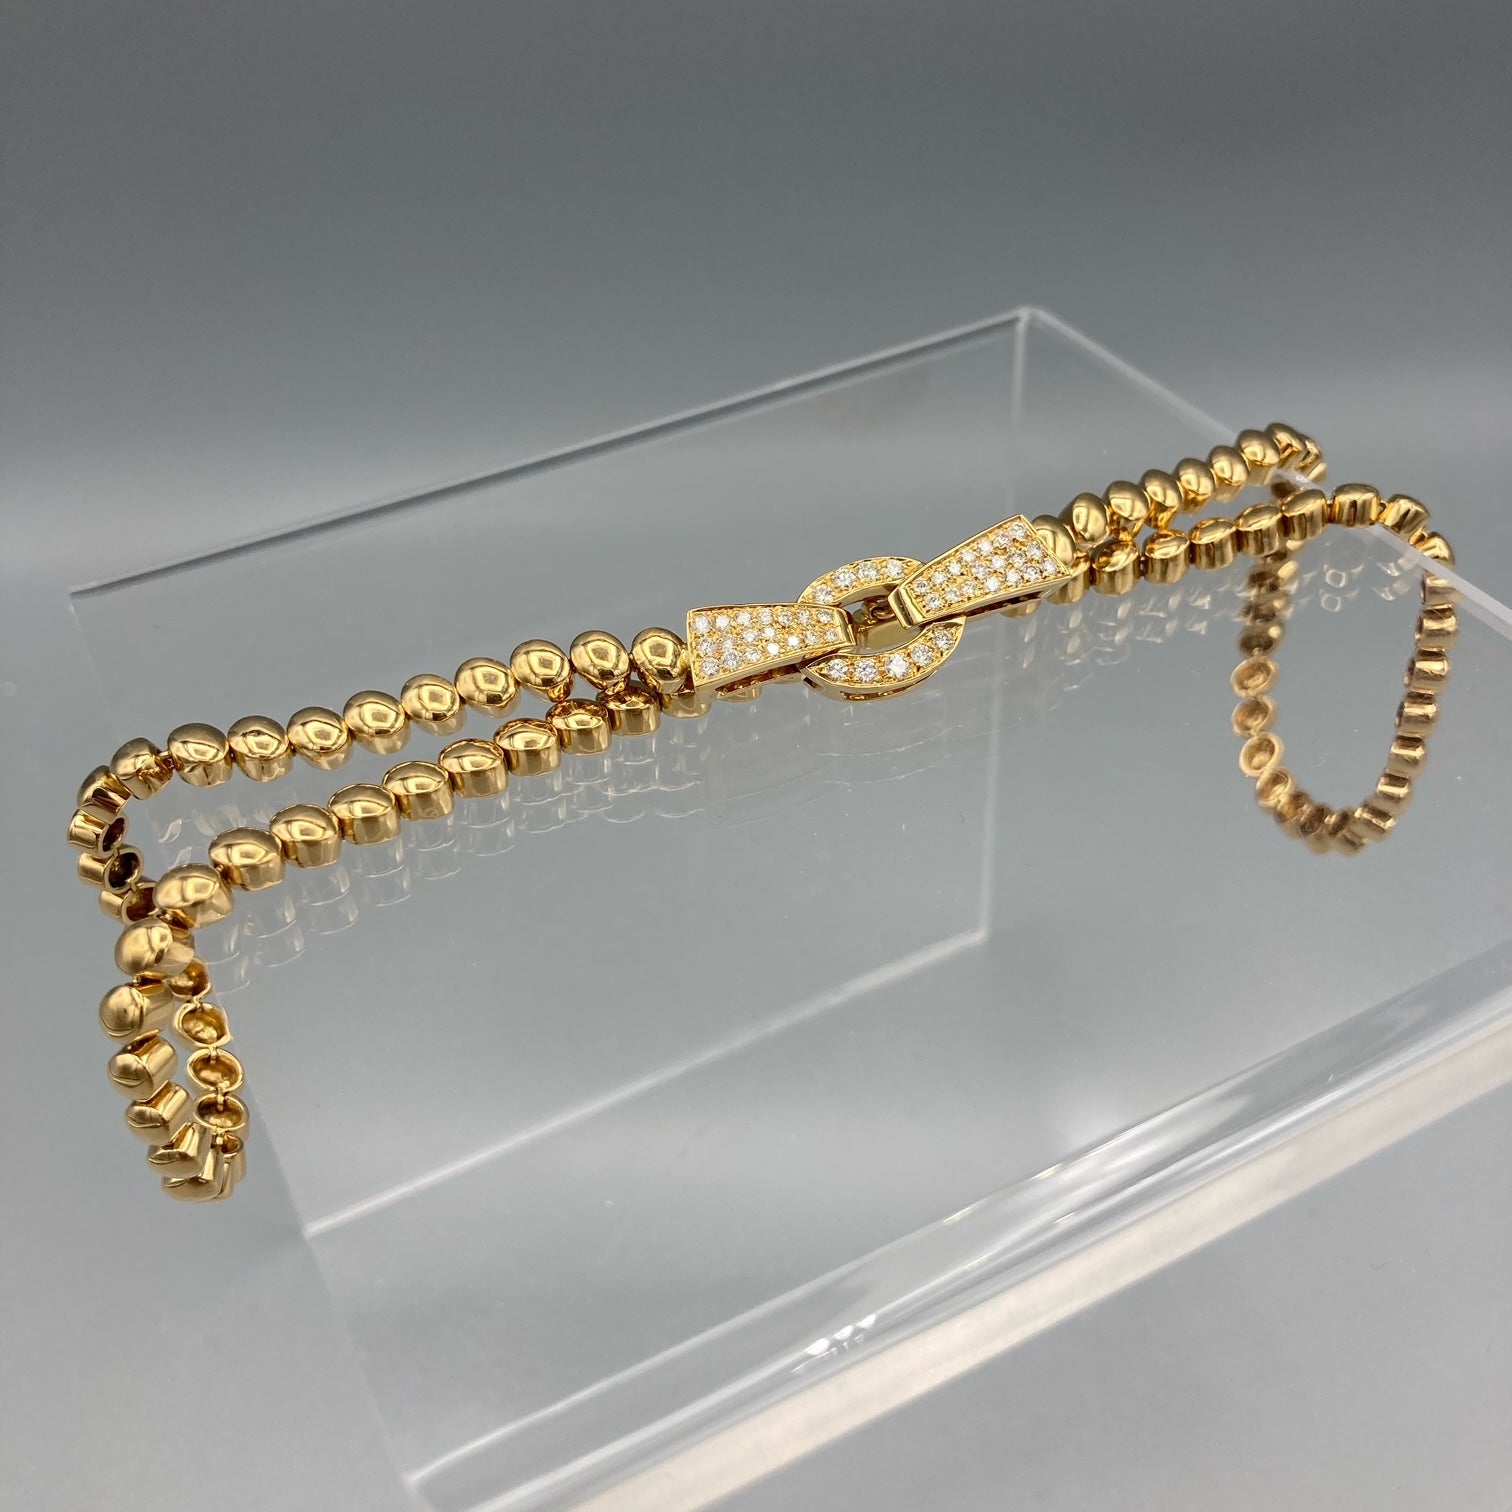 Yellow Gold 18k Collar Necklace with Diamond Bowtie Pendant